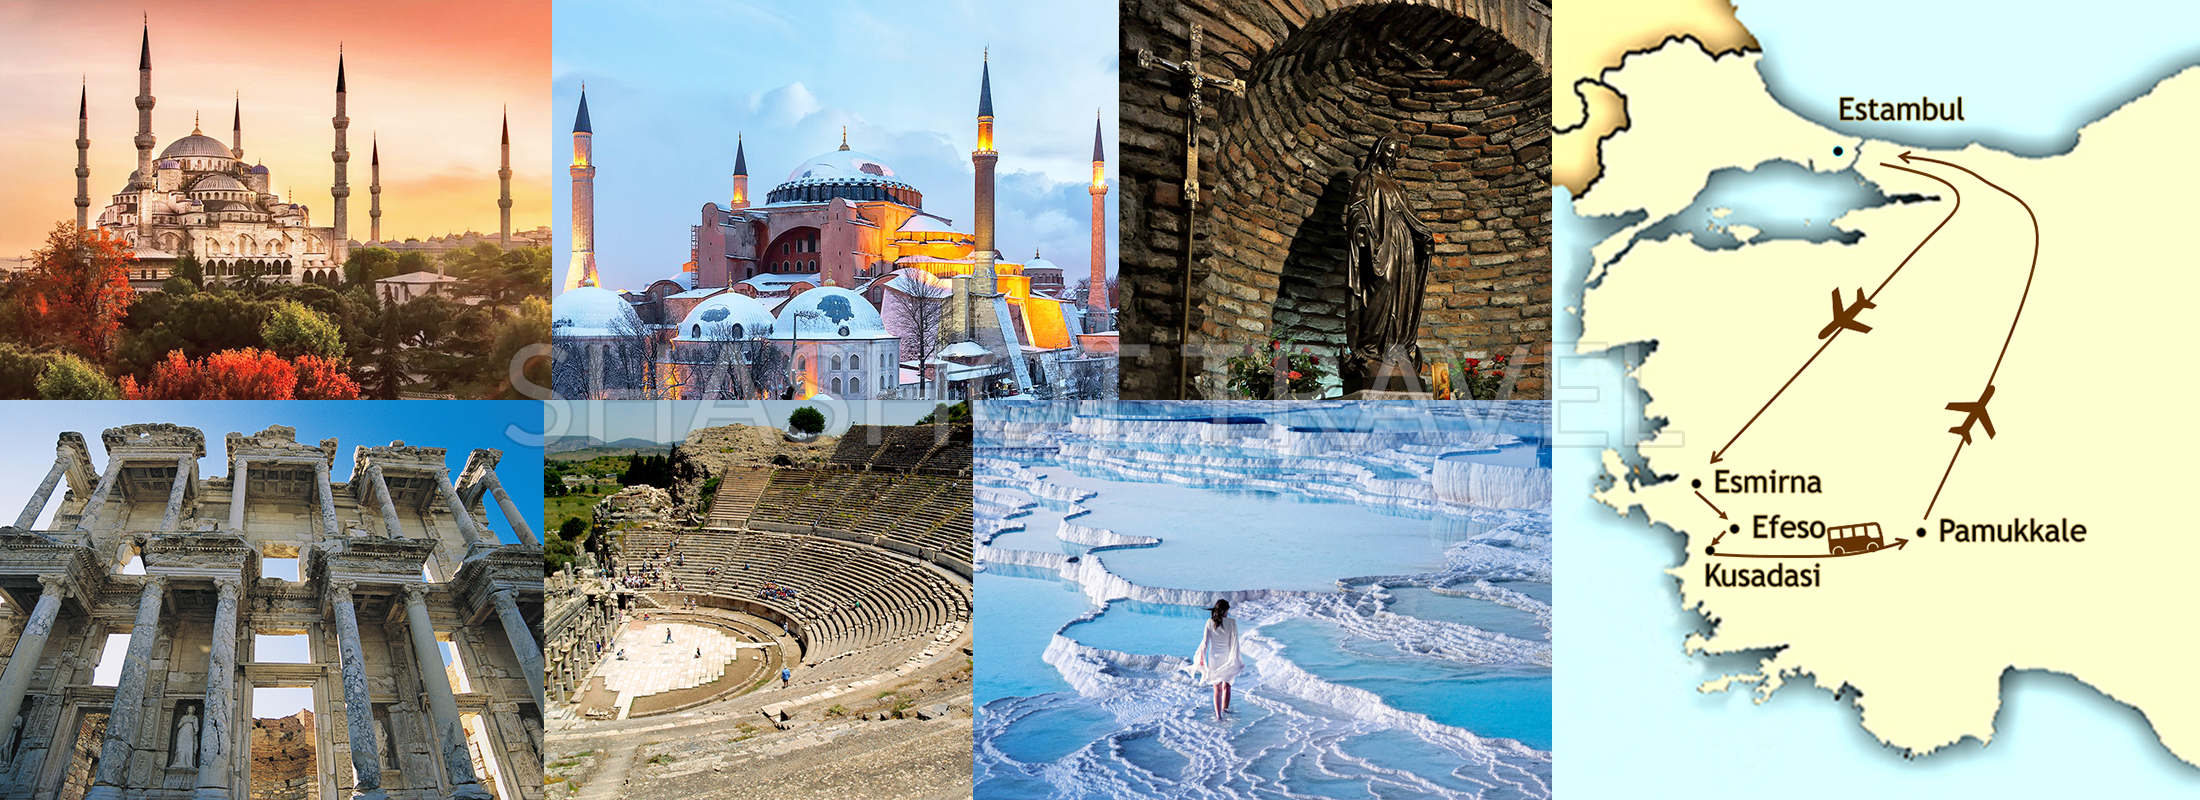 5-dias-estambul-efeso-pamukkale-con-avion-shashot-travel-istanbul-map